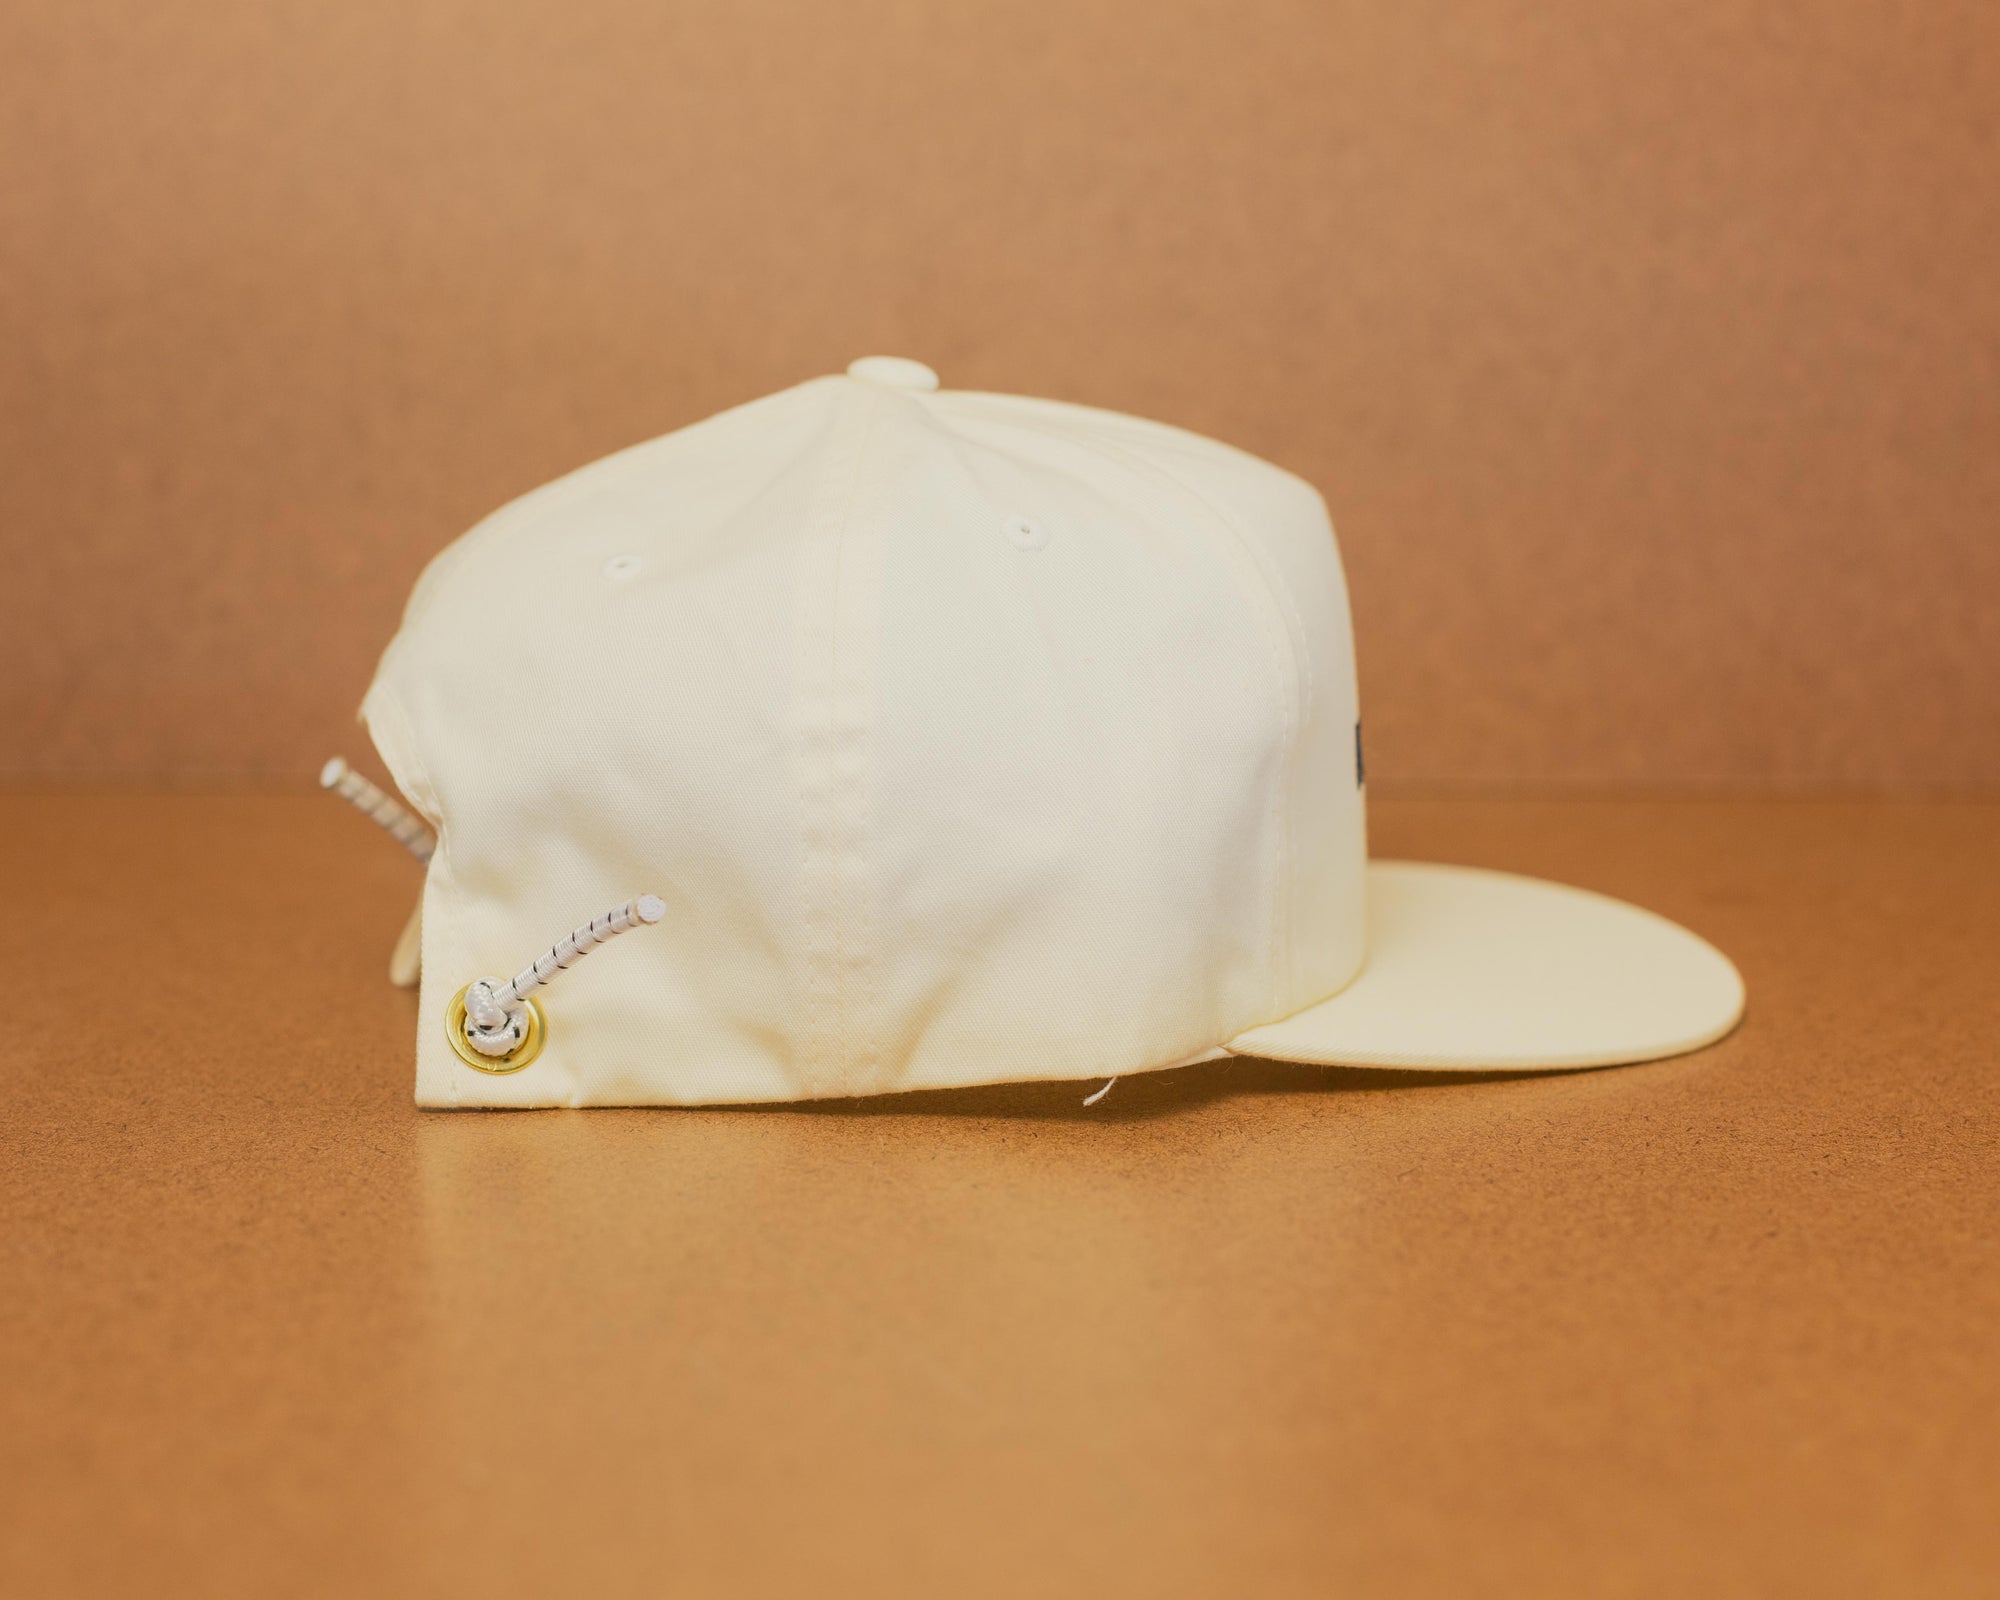 Western Hydrodynamic Research- Canvas Promotional Hat (Cream)